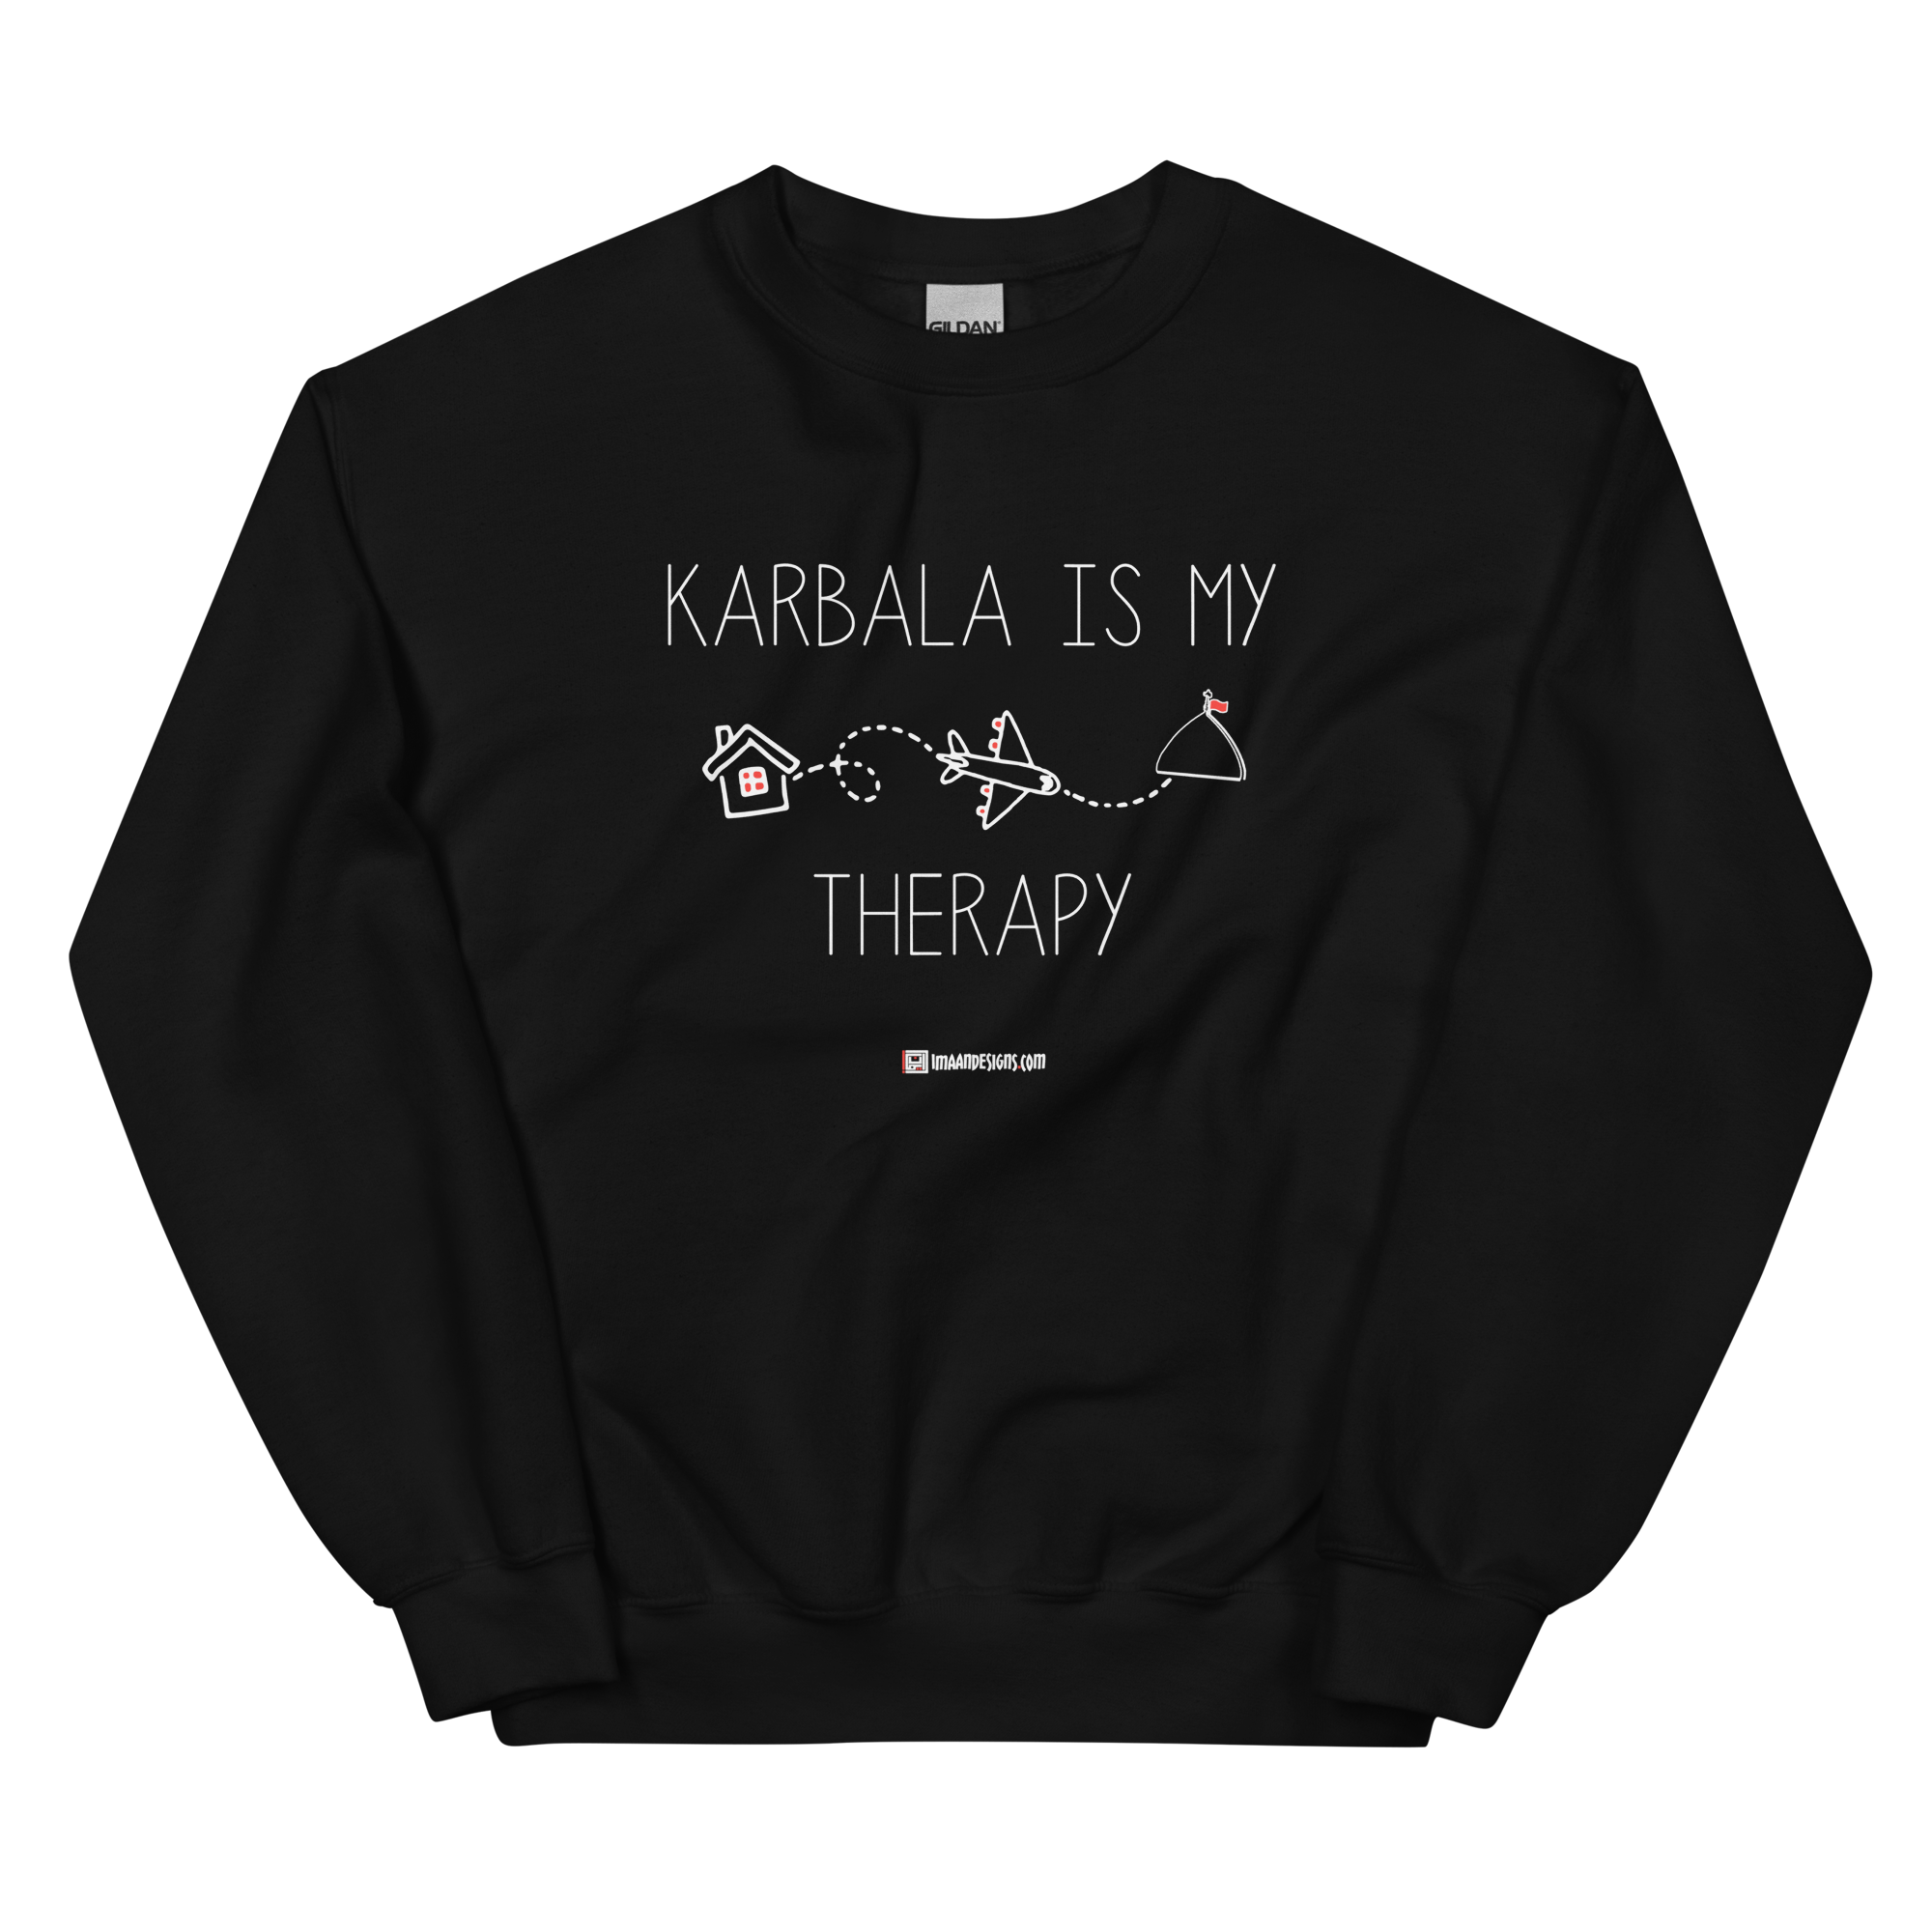 My Therapy - Adult Sweatshirt